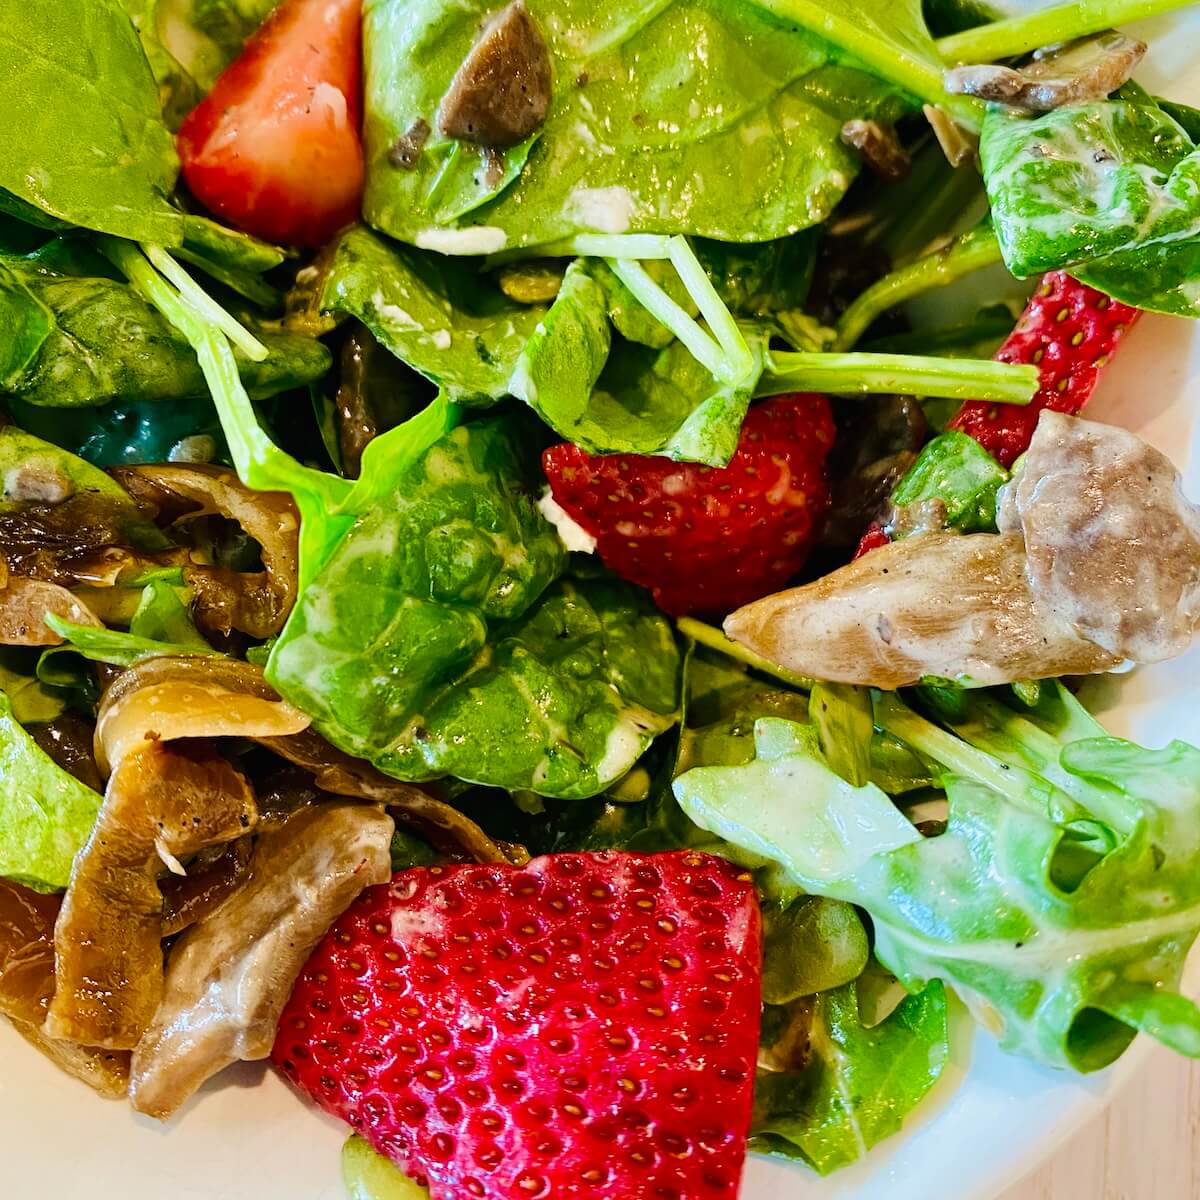 Warm mushroom spinach salad with strawberries